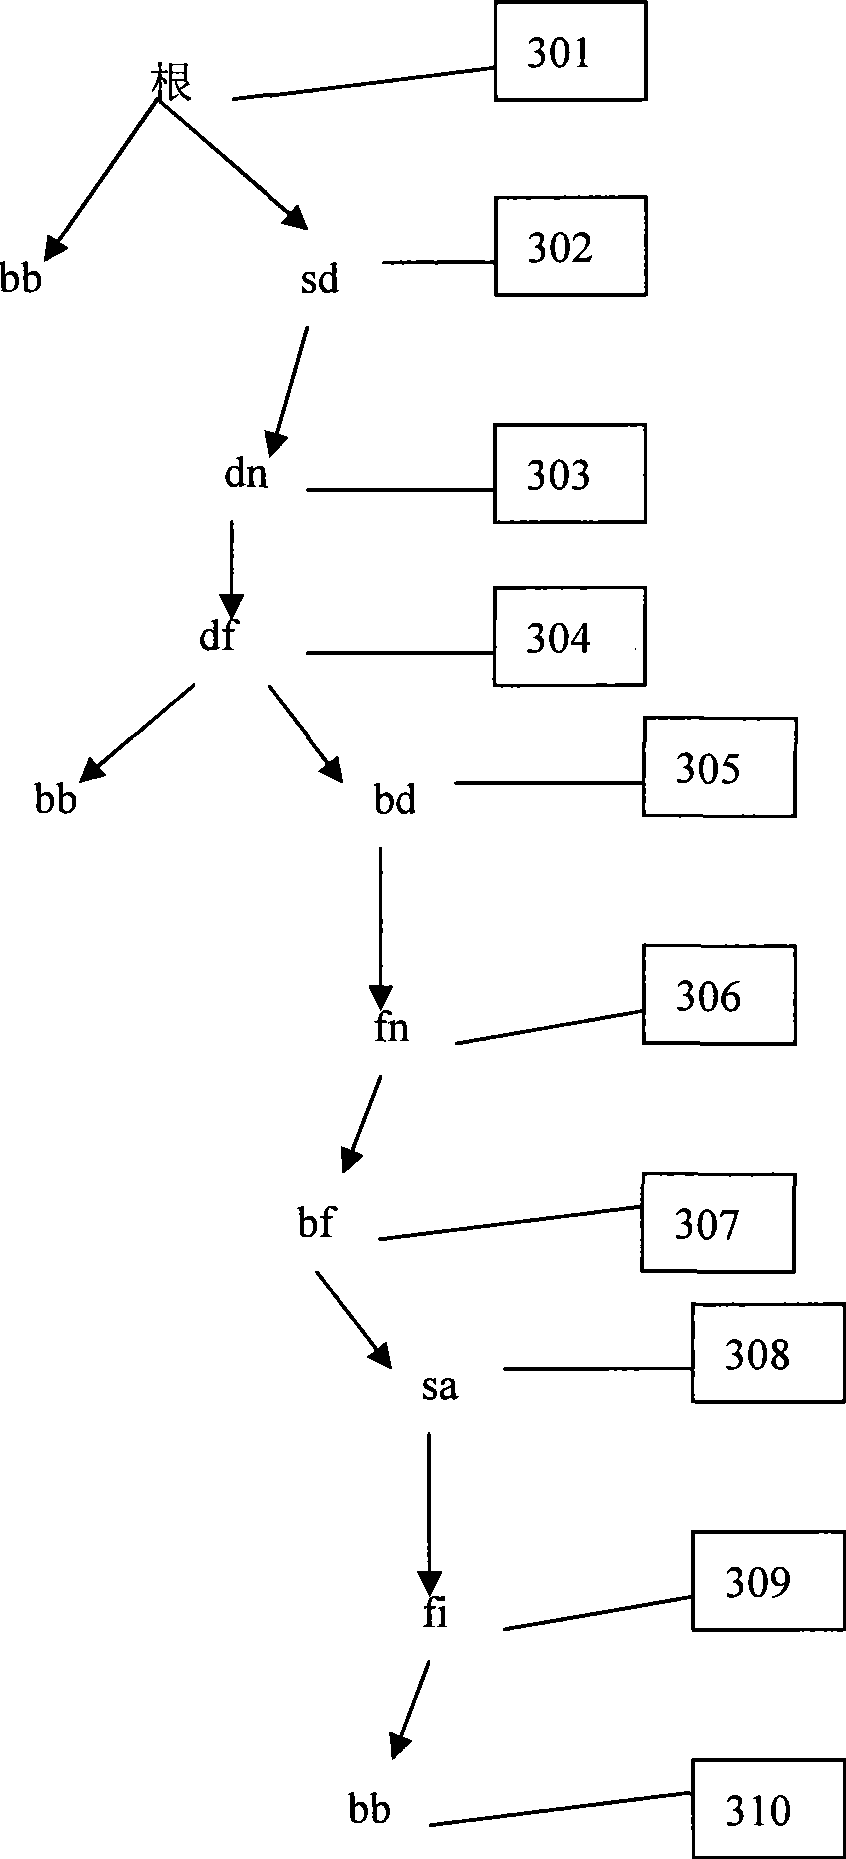 Words language structure tree building method